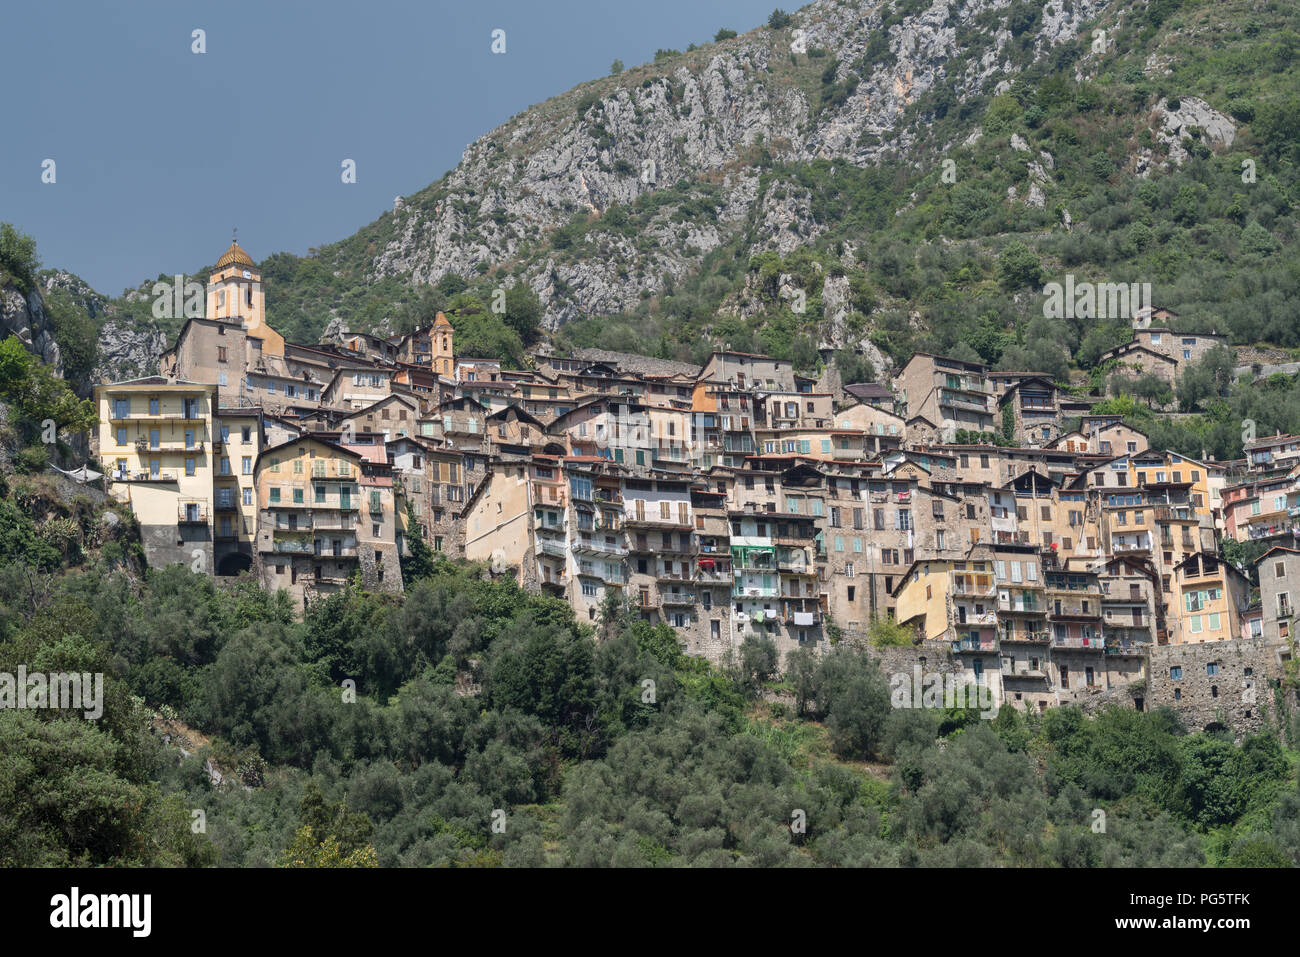 Saorge medieval village, Alpes Maritimes, France Stock Photo